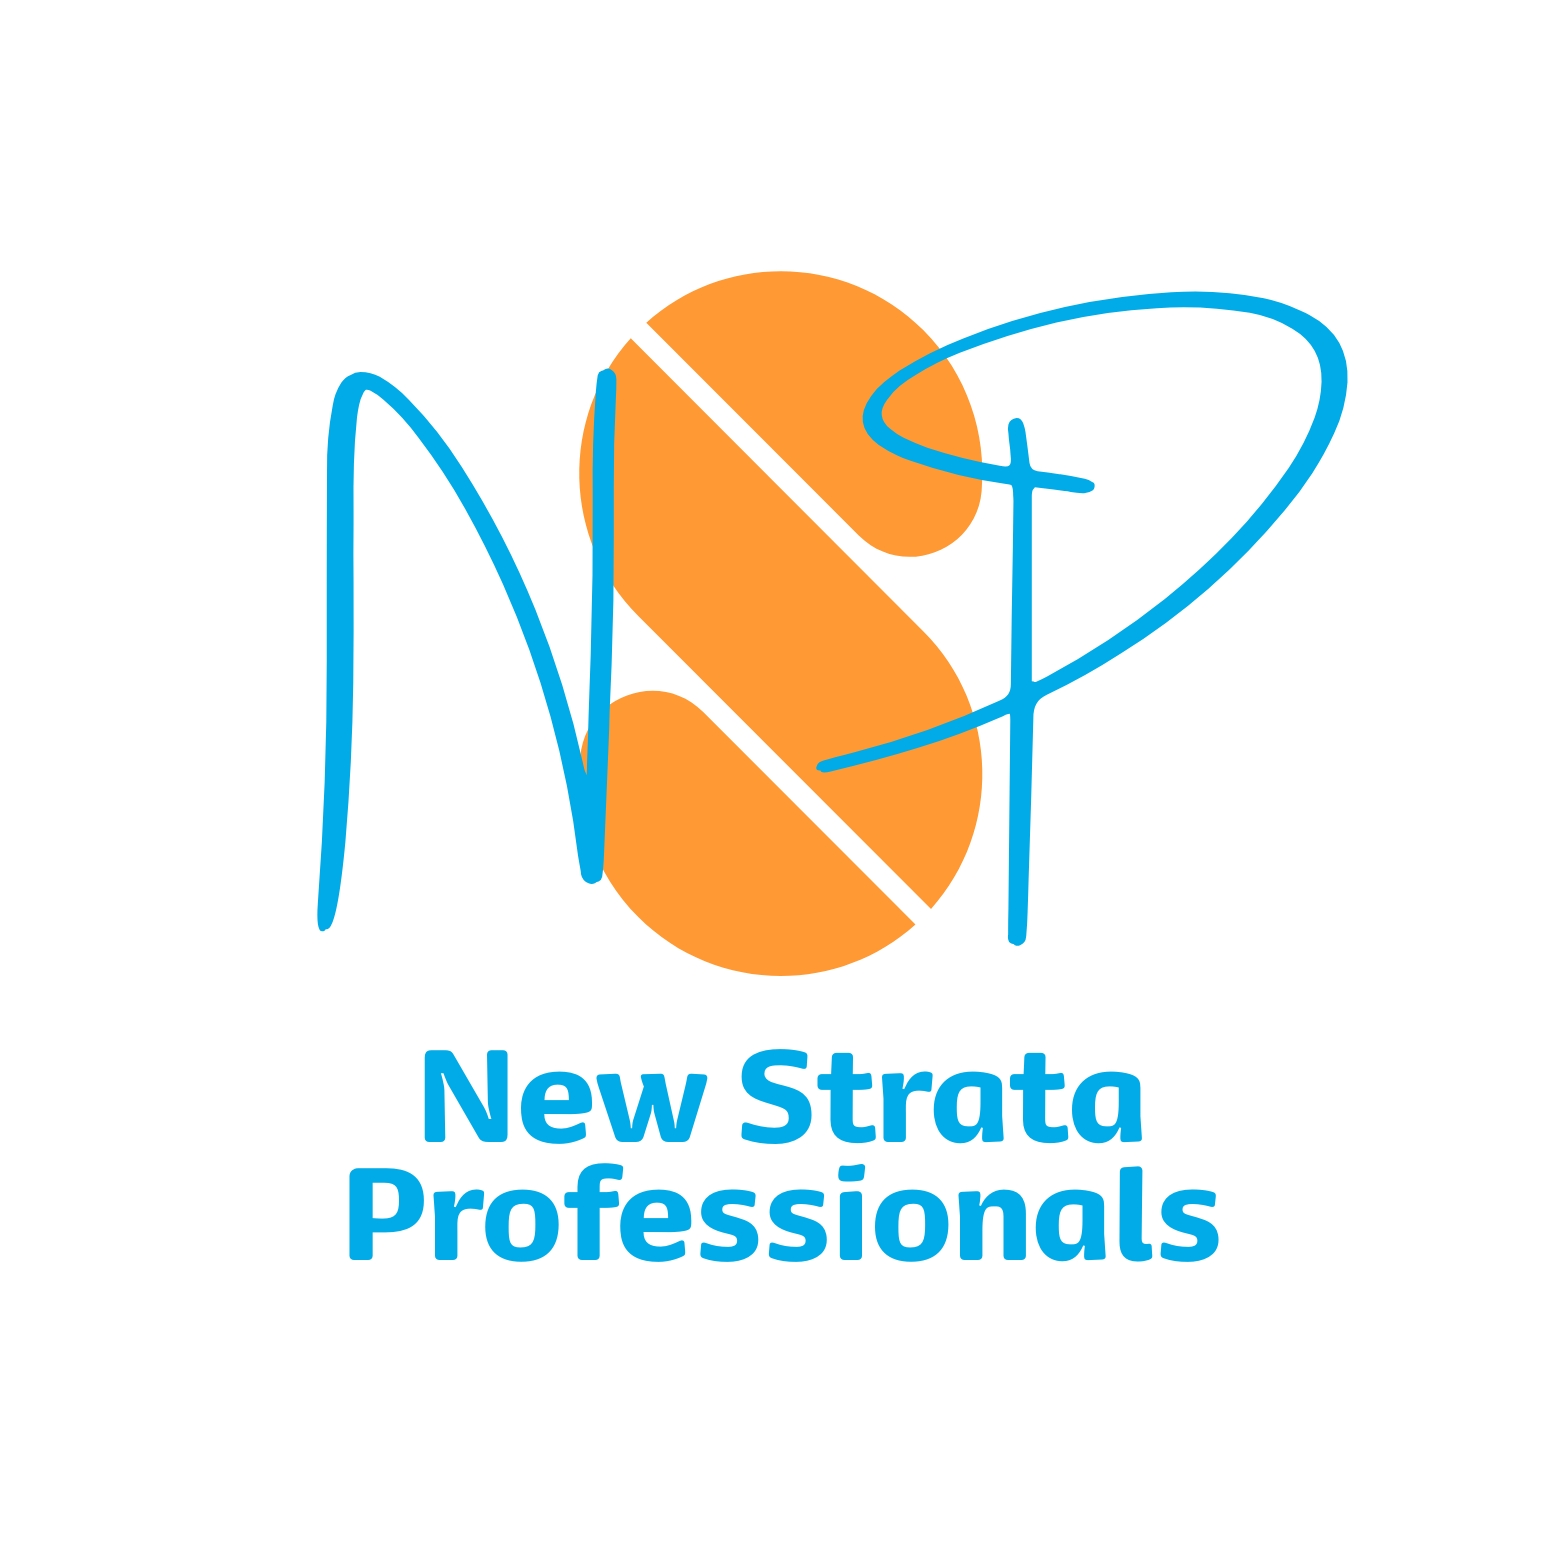 WA - New Strata Professionals Launch